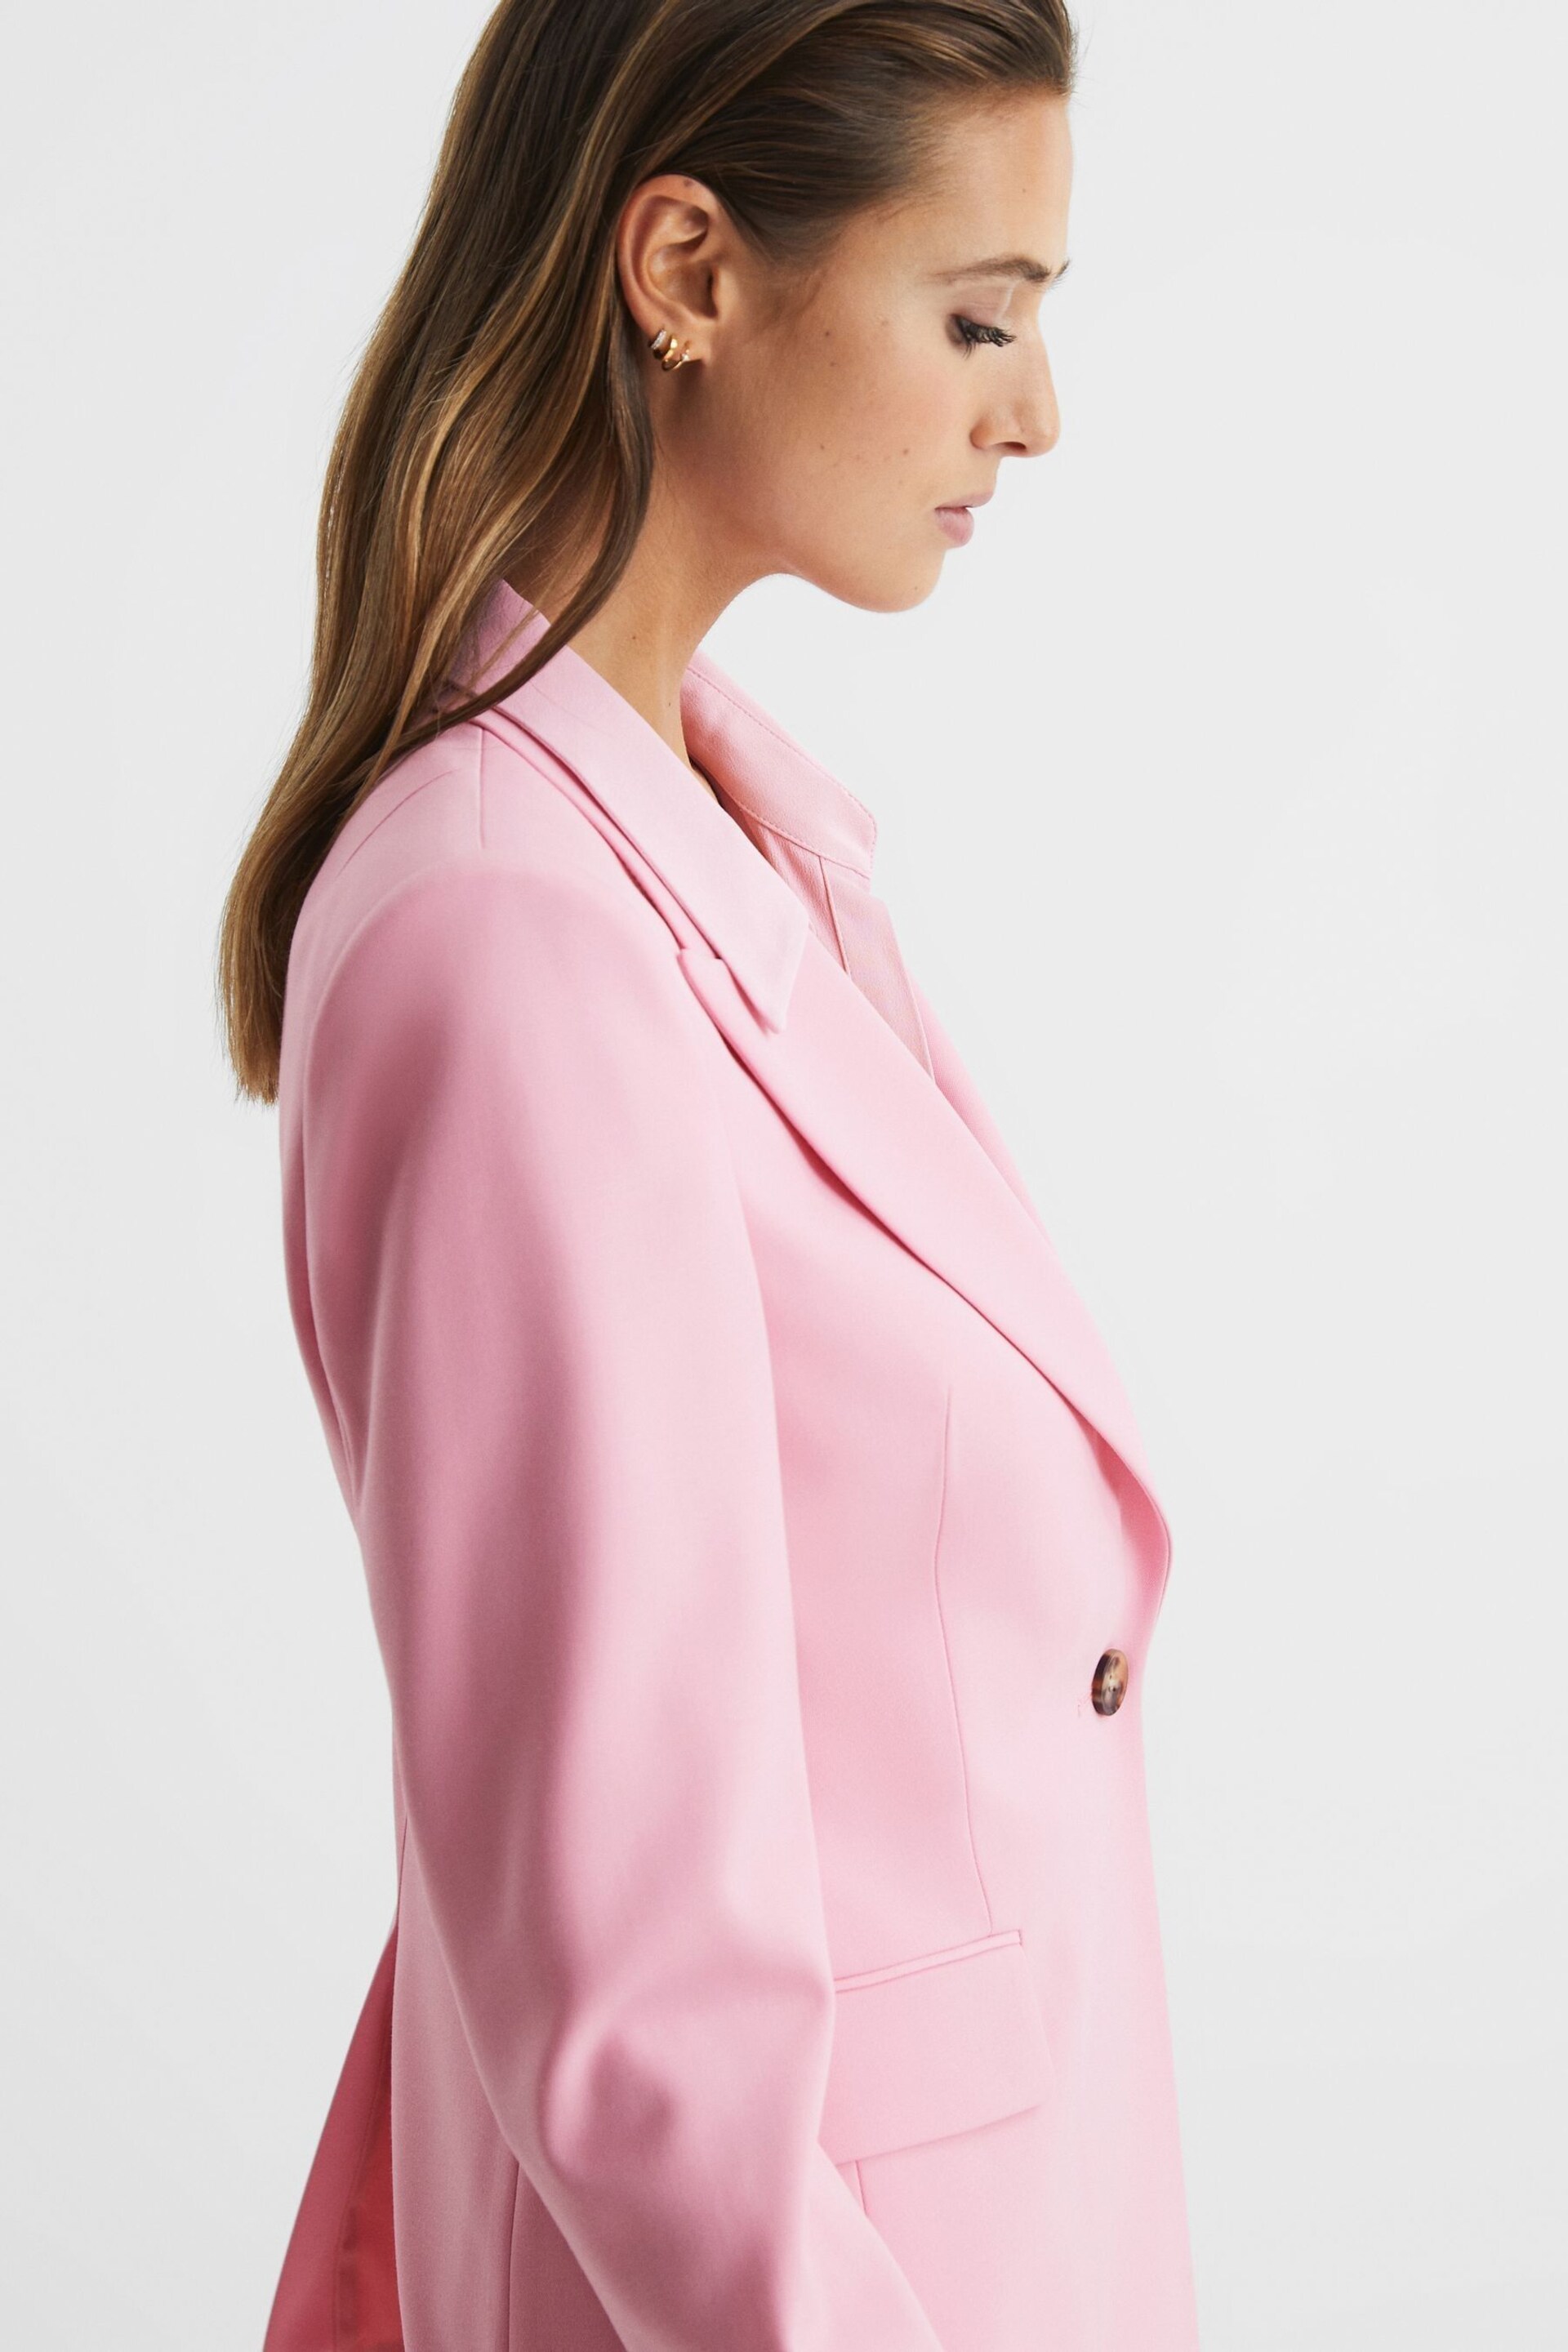 Reiss Pink Blair Single Breasted Wool Blend Blazer - Image 6 of 7